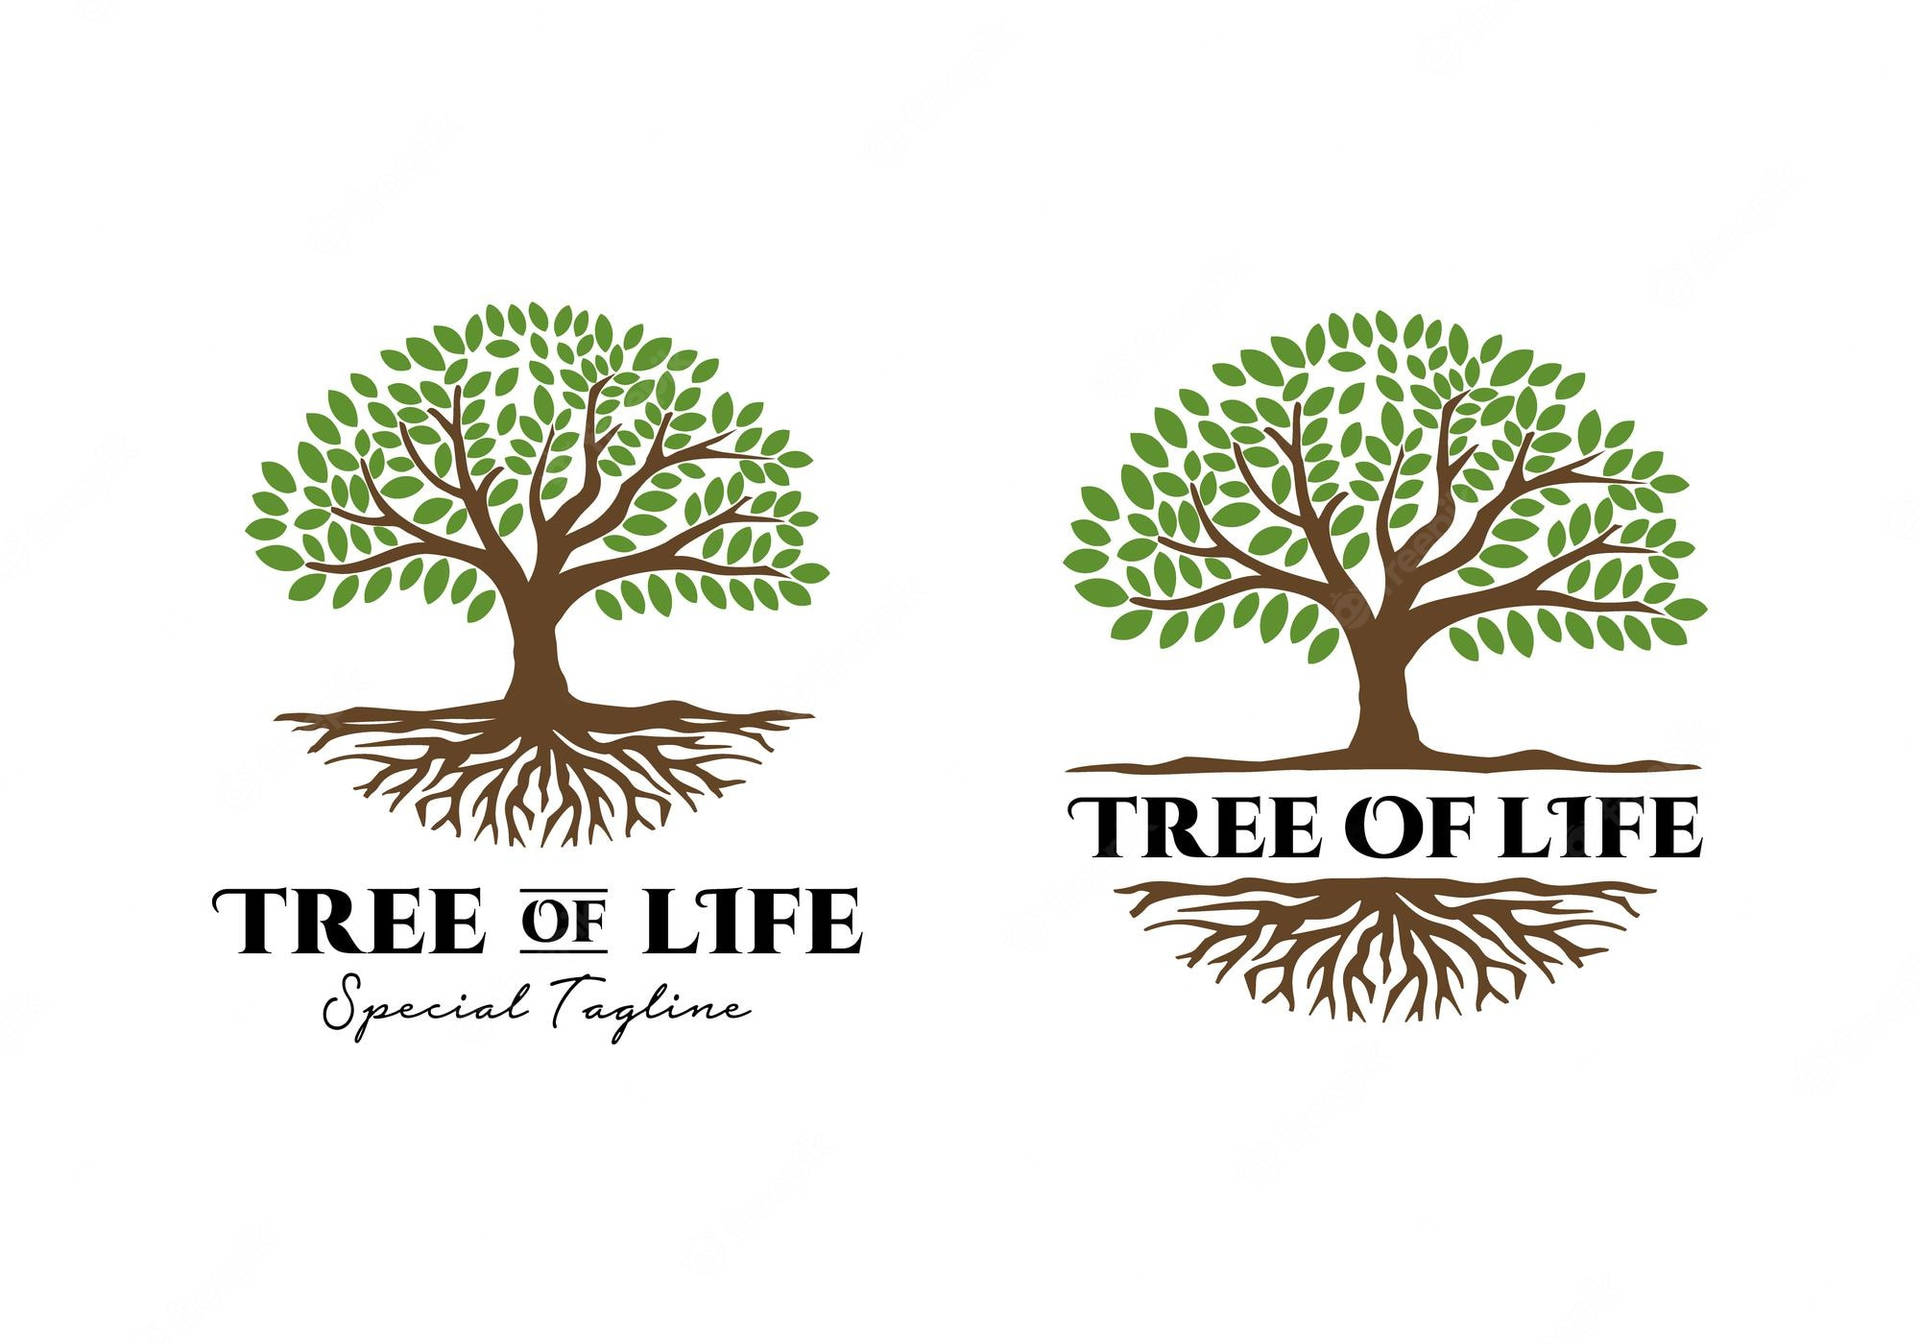 Two Tree Of Life Logos